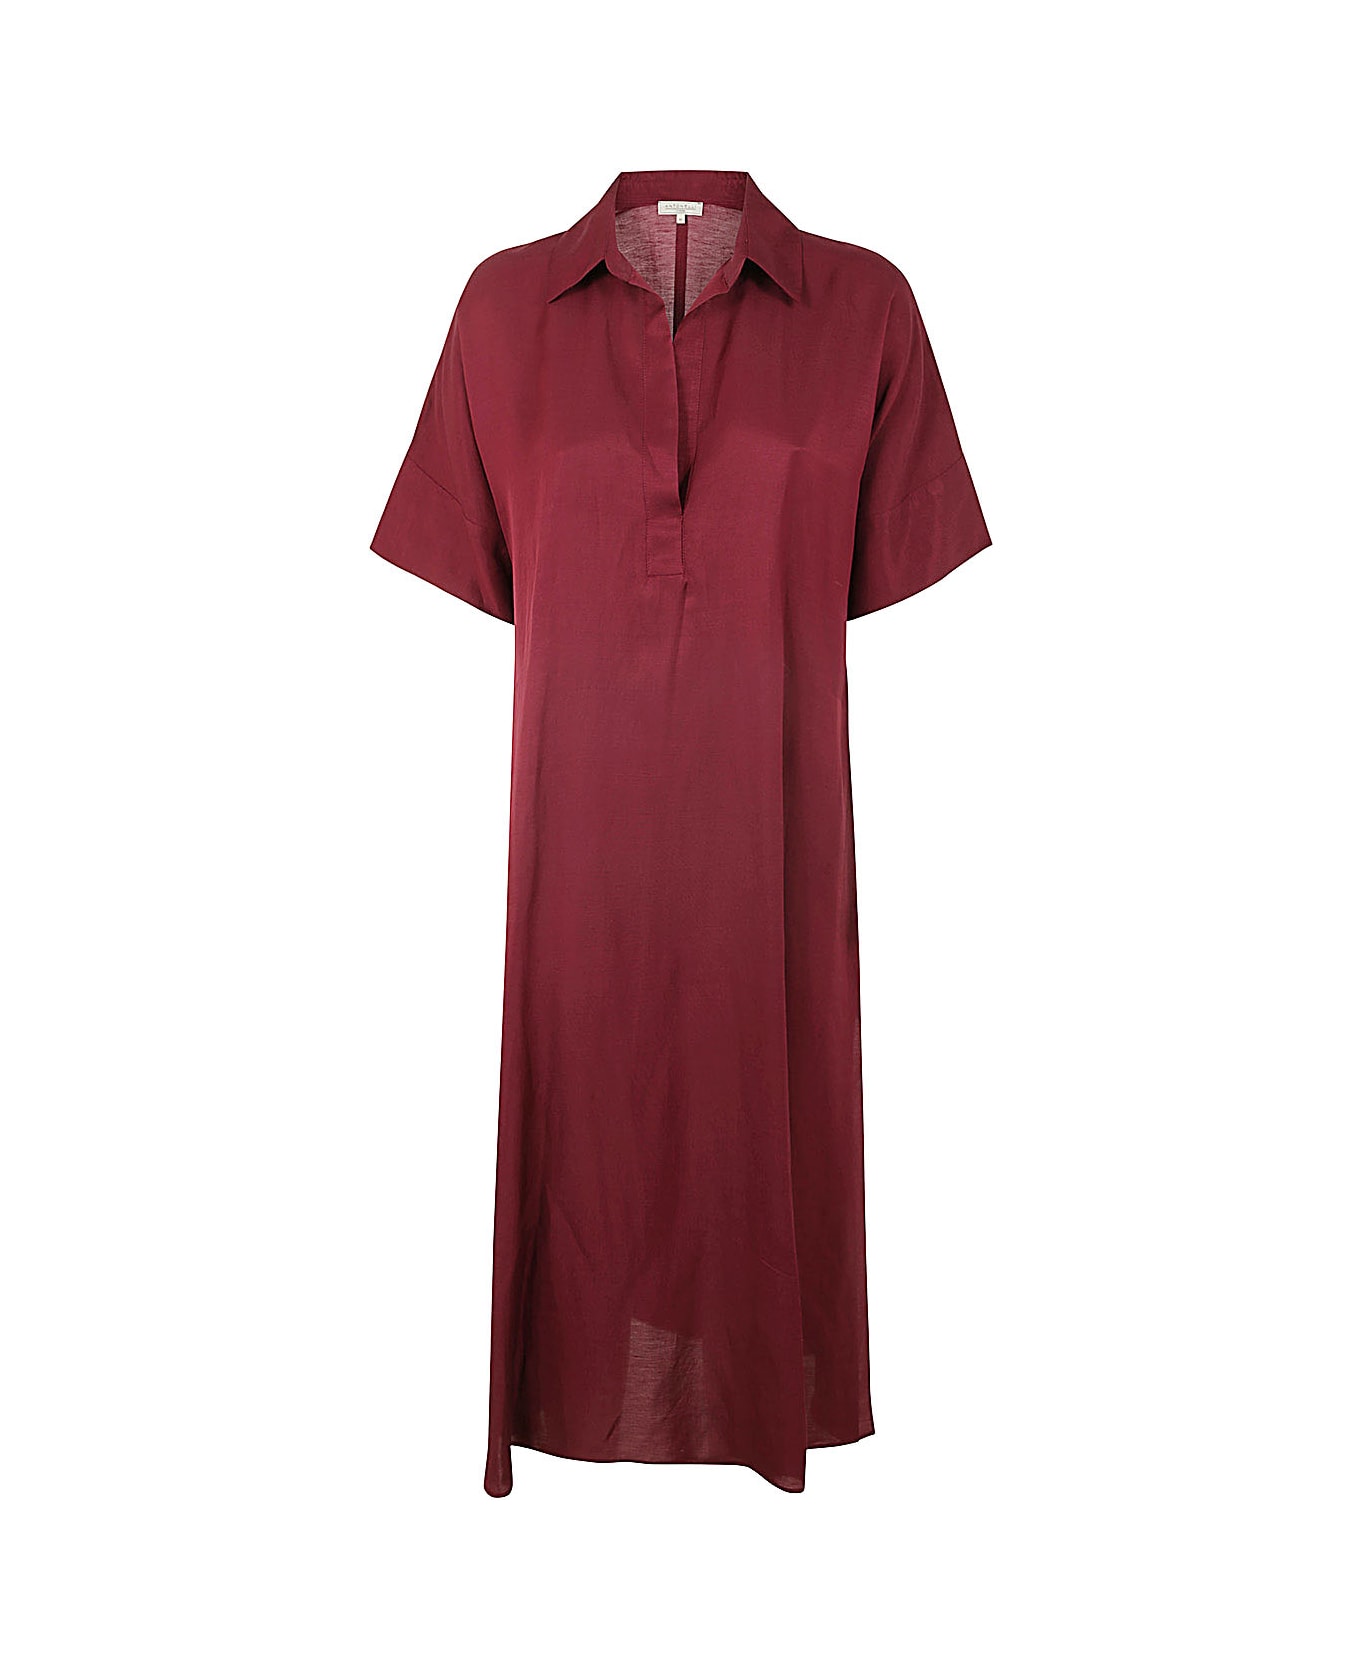 Antonelli Nemo Short Sleeves Long Dress - Bordeaux